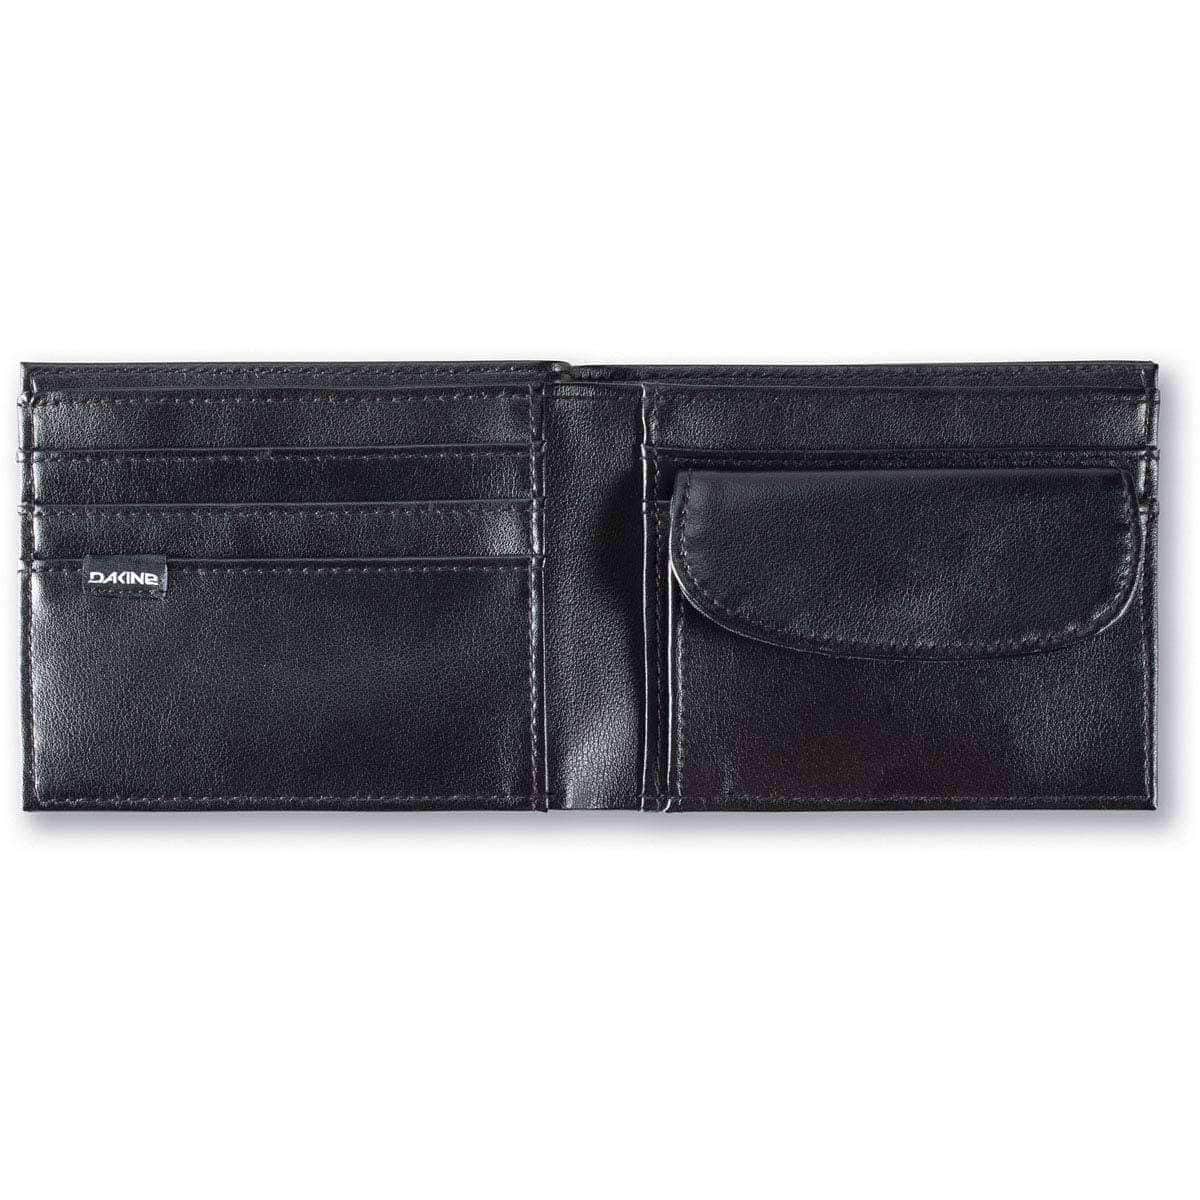 Dakine Archer Coin Leather Wallet - Black - Mens Wallet by Dakine